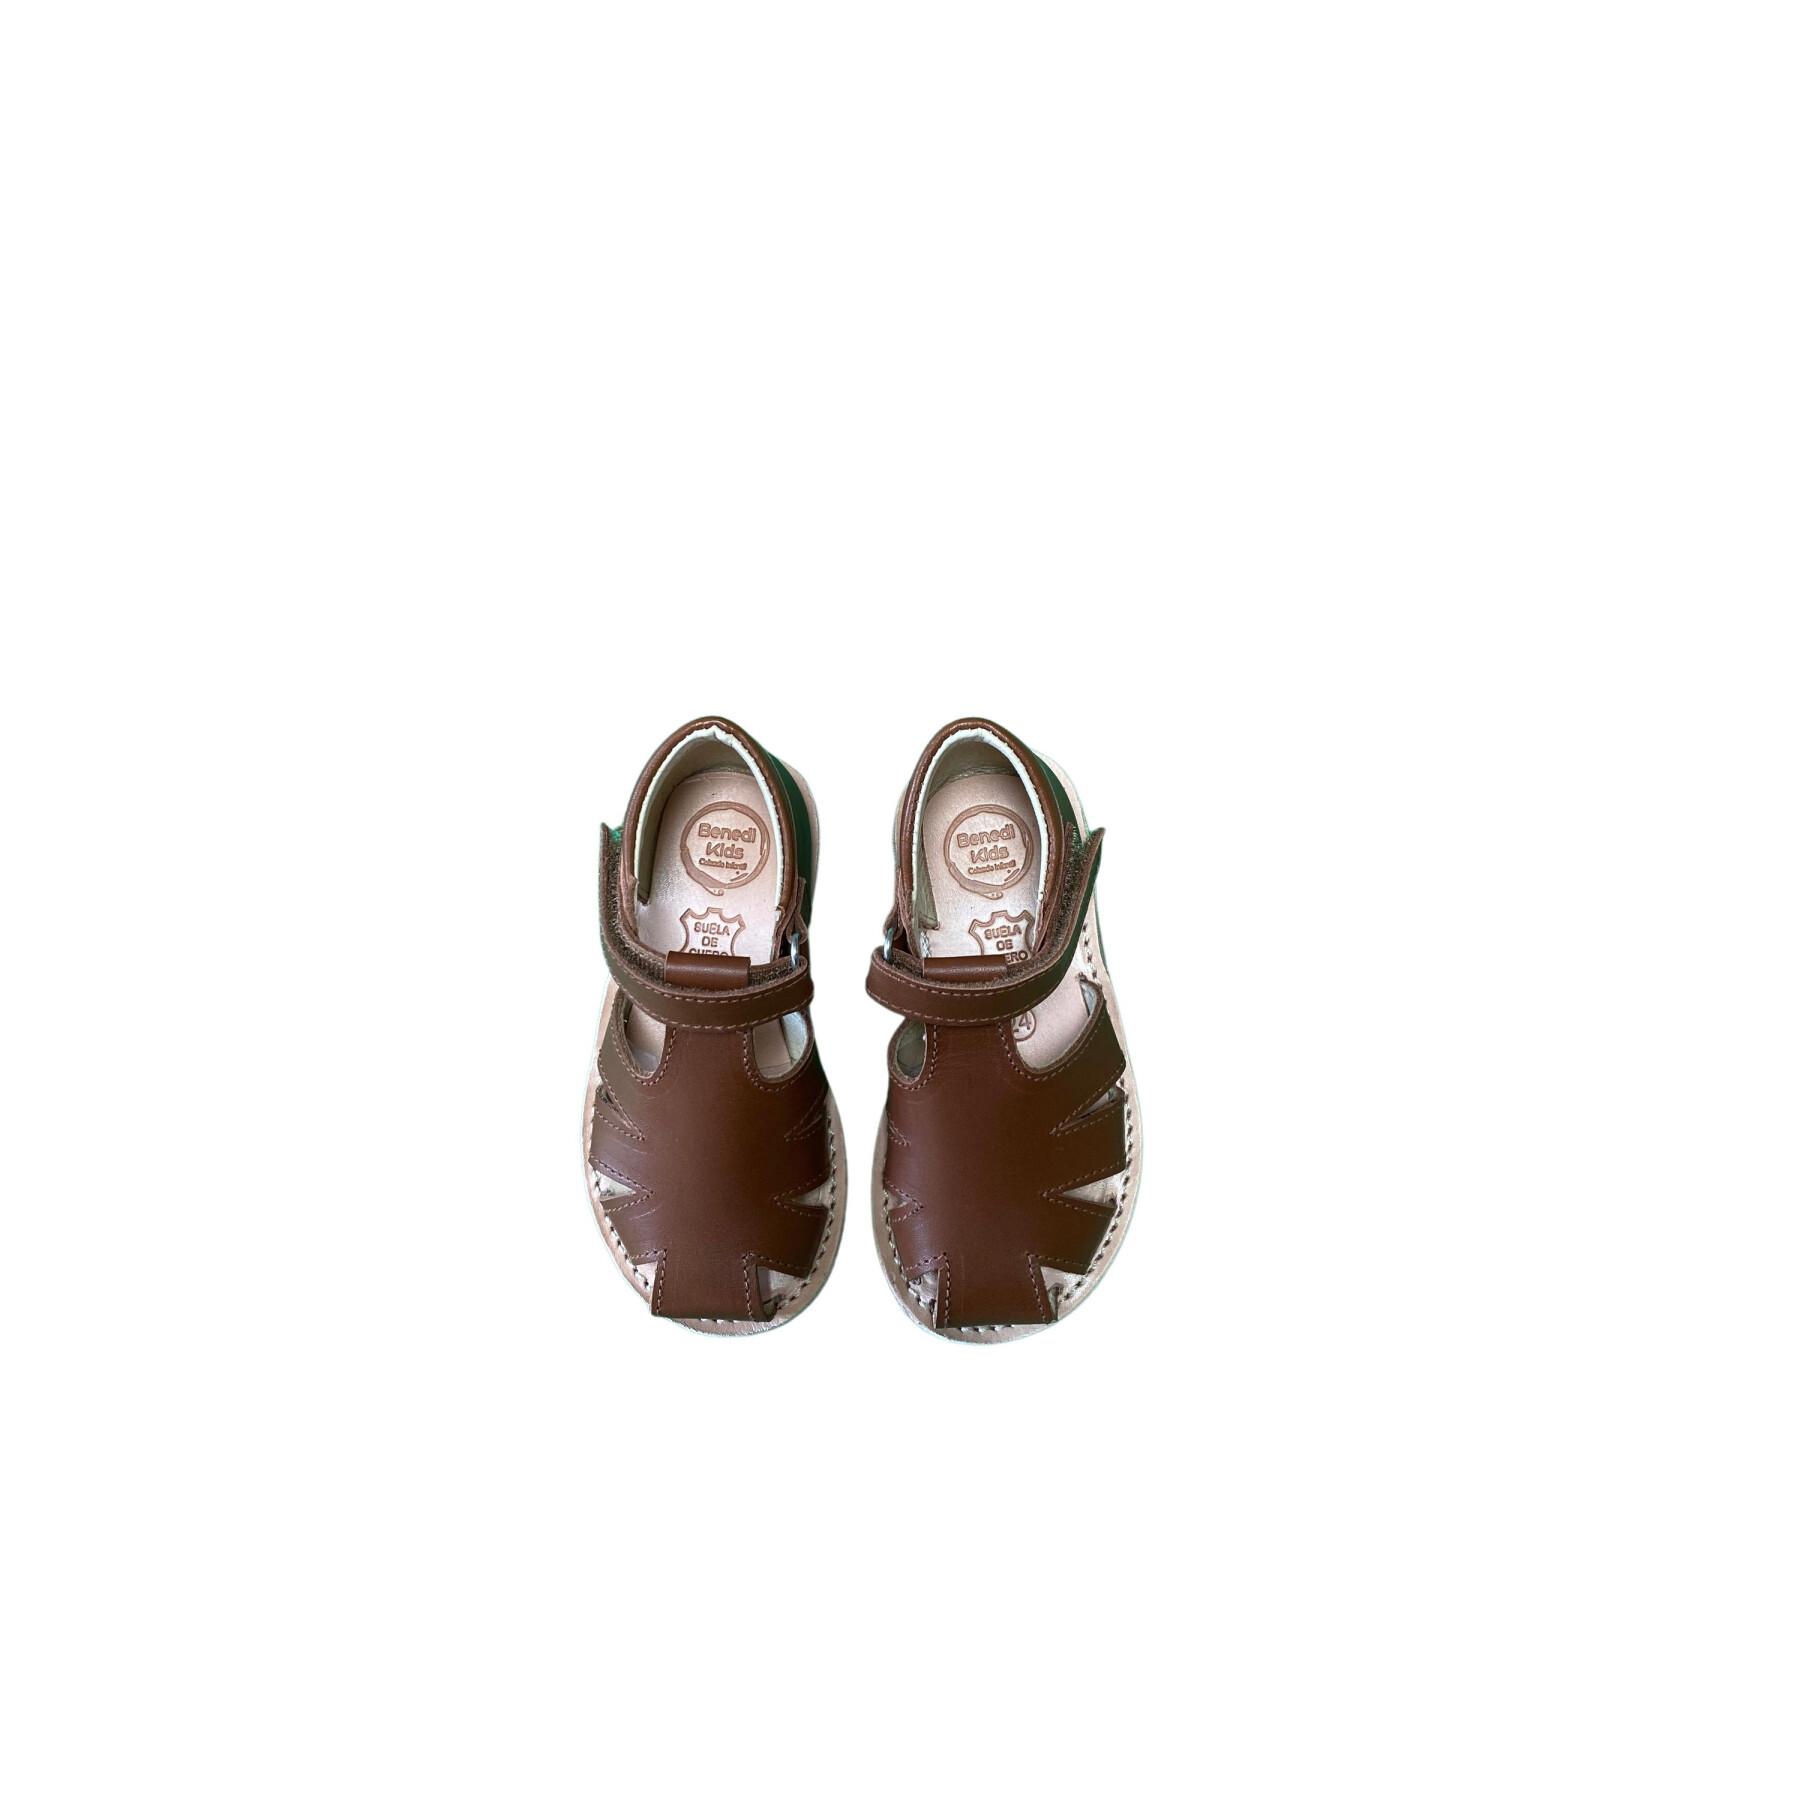 Children's sandals Benedi Elena